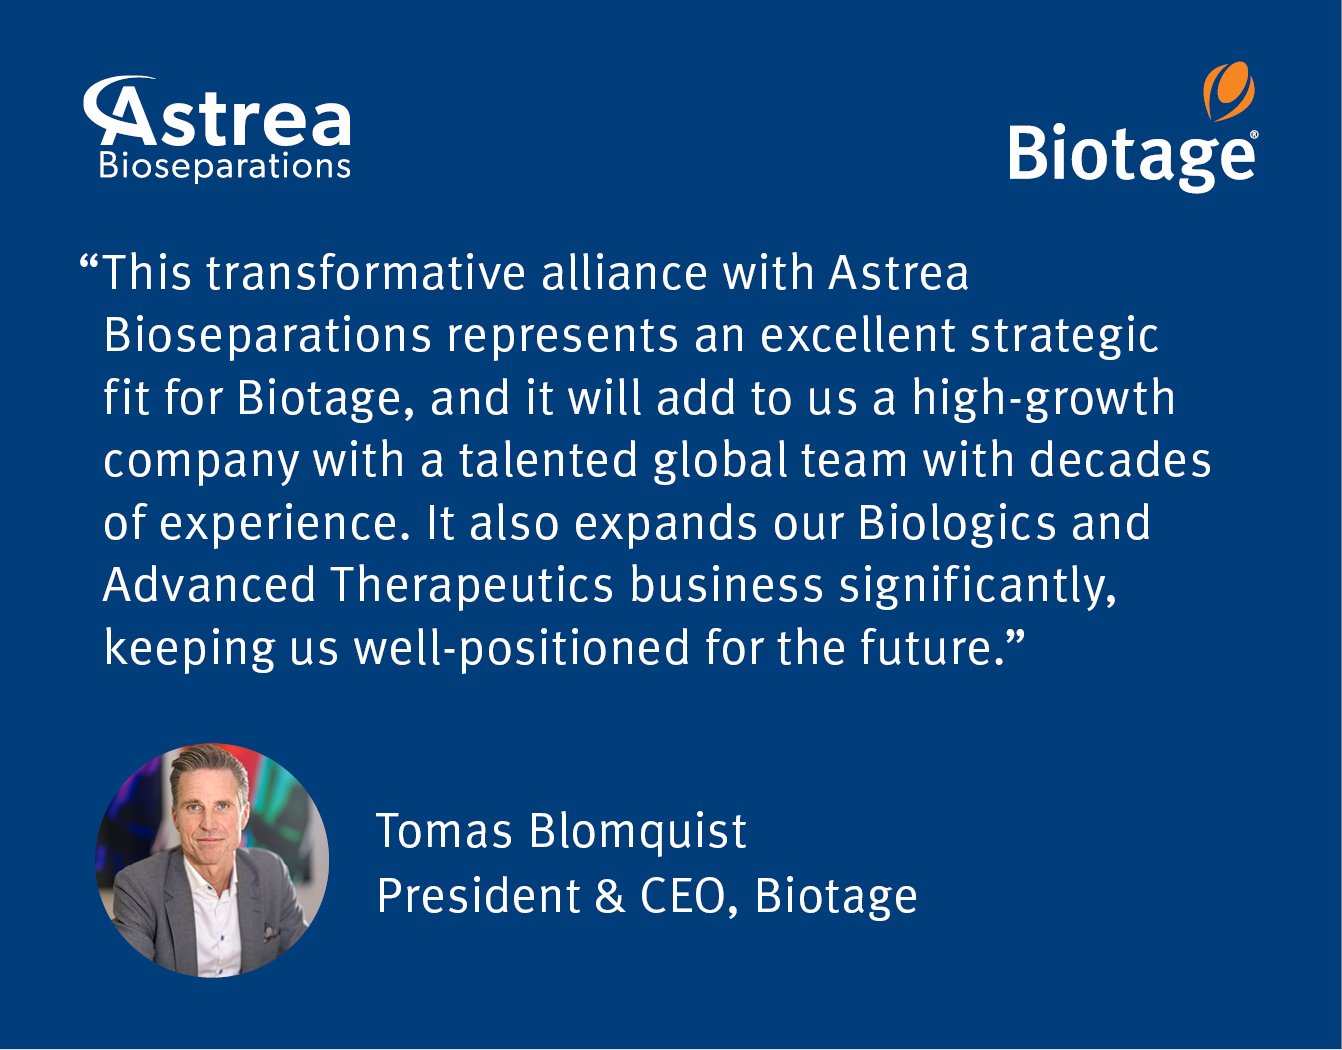 Biotage Makes Transformative Acquisition of Astrea Bioseparations